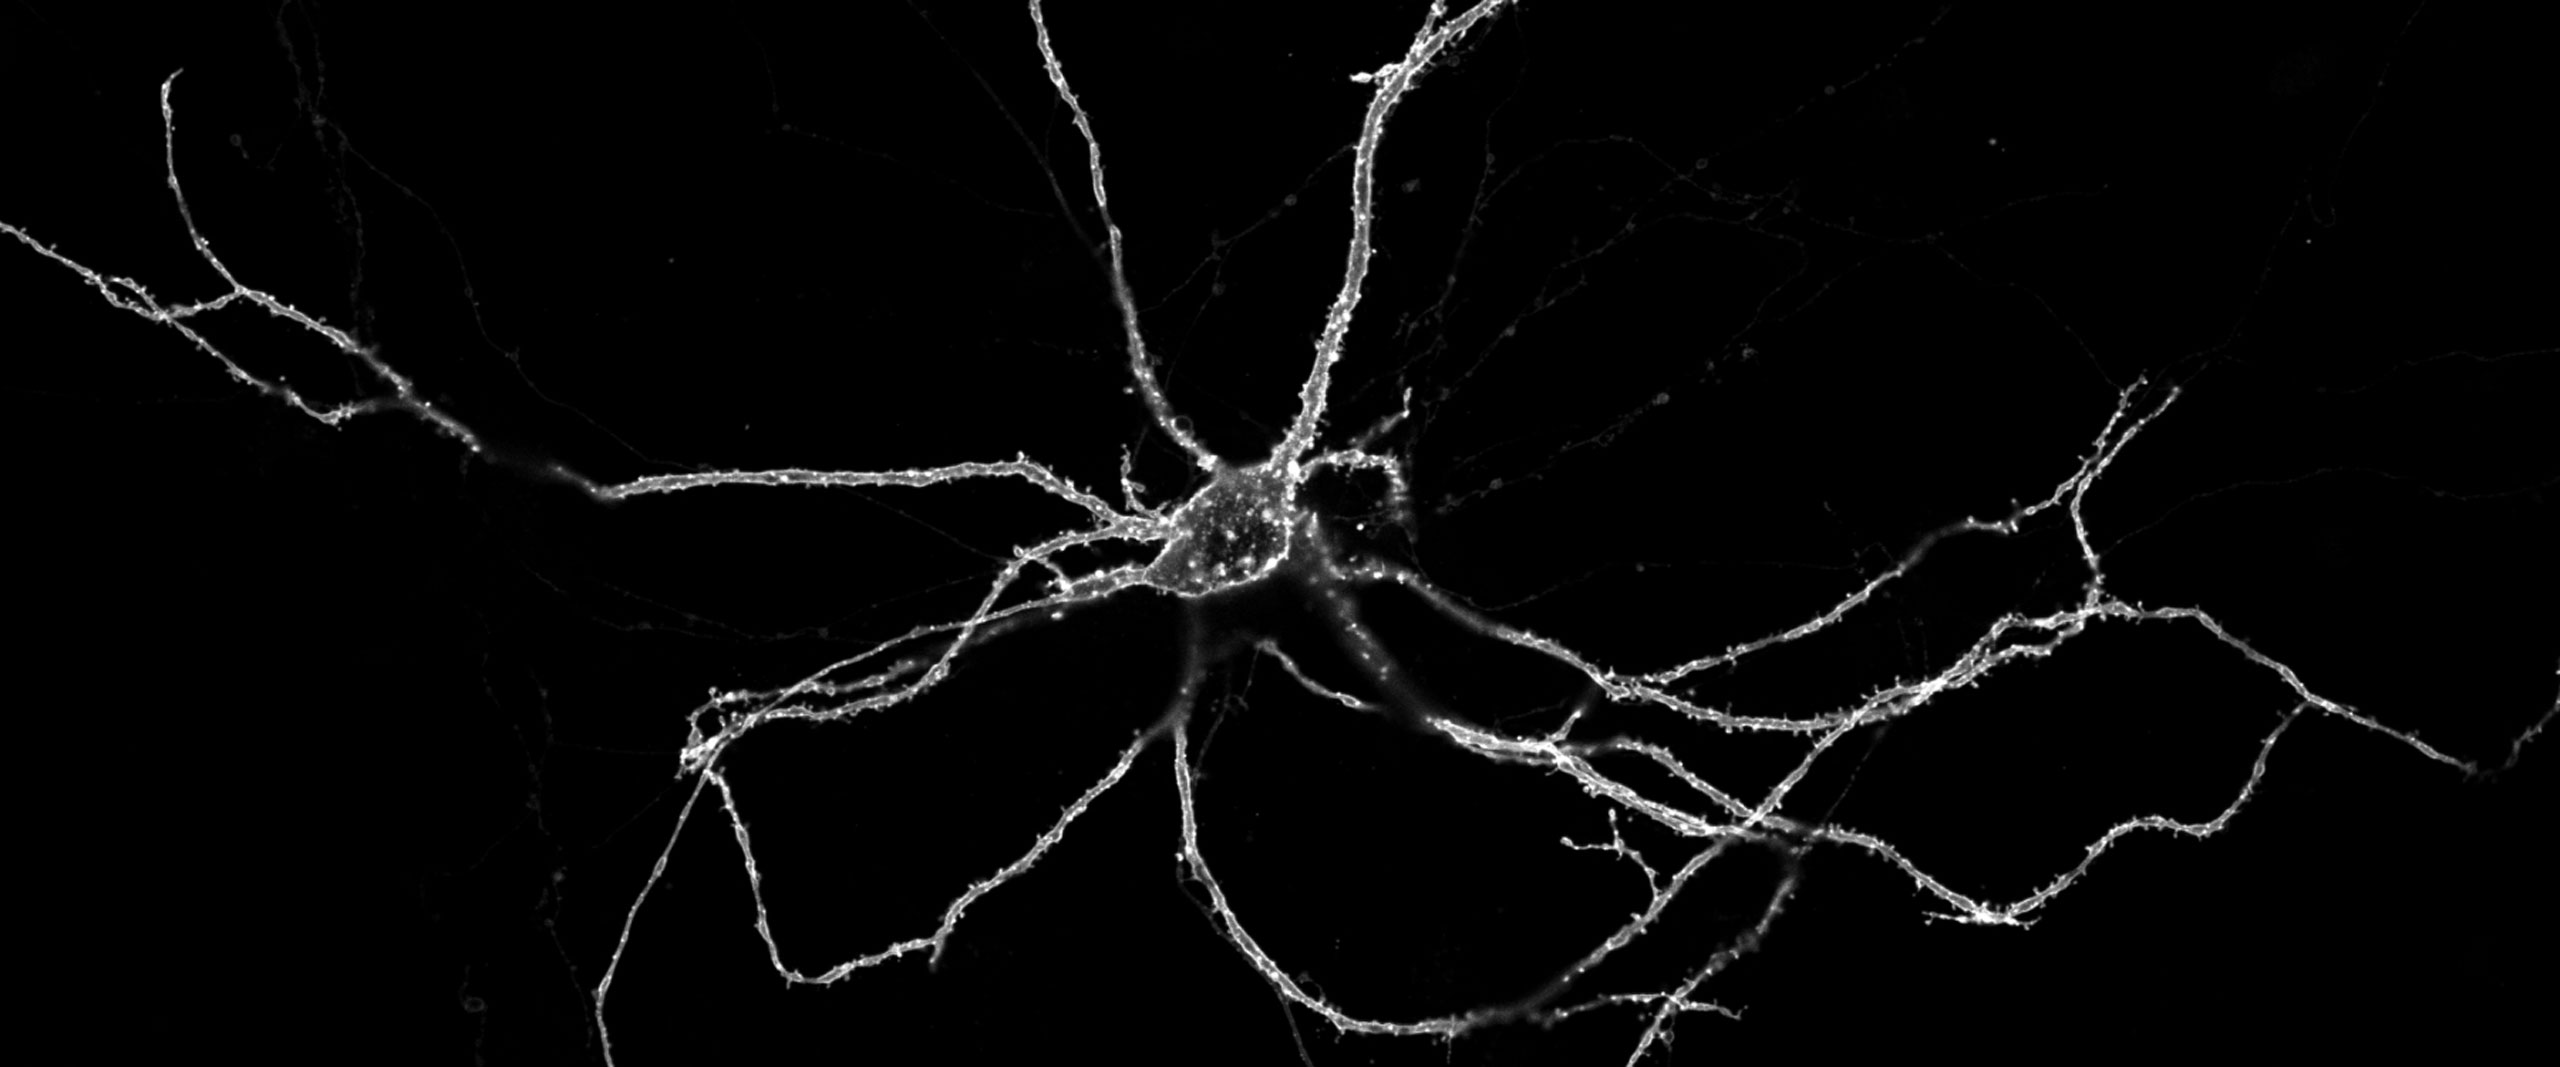 Neurone: „Lichterkette“ zeigt Erregungsweiterleitung an